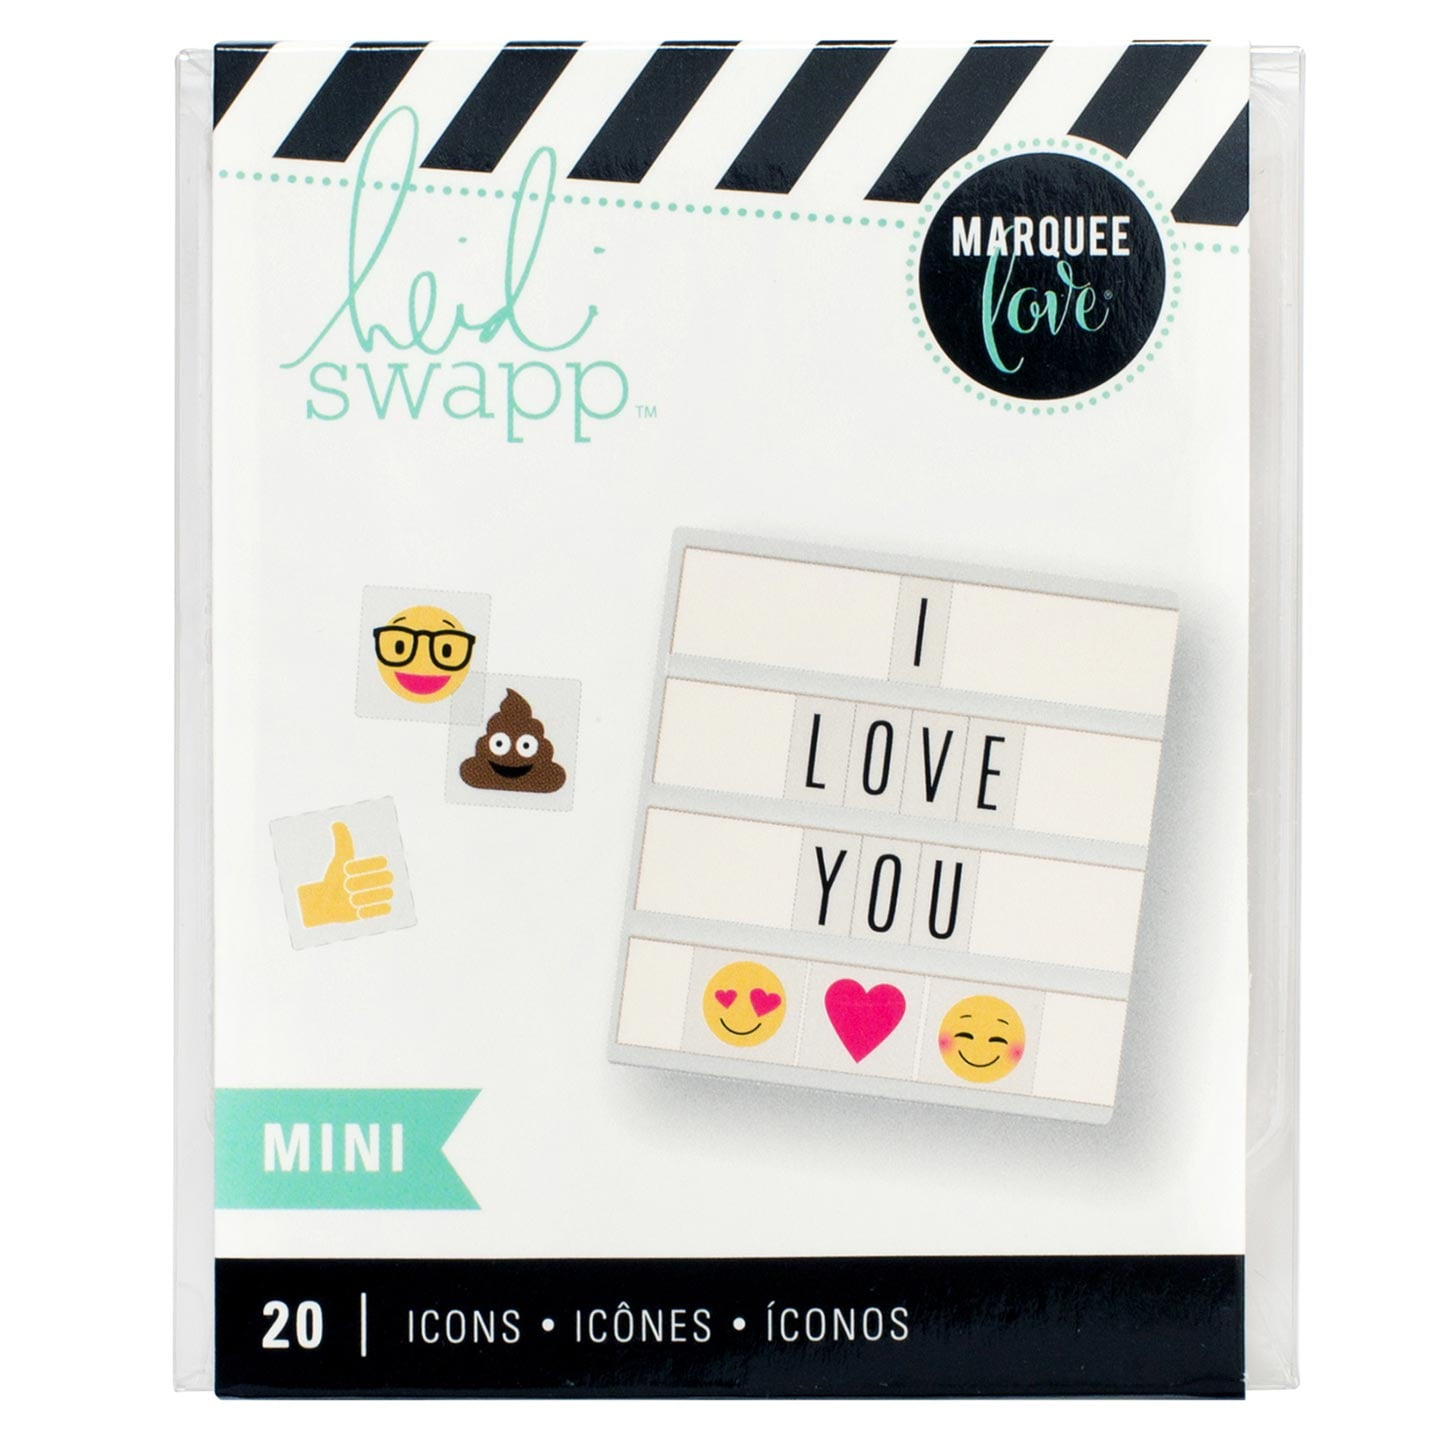 Mini Icons Emoji NEW Heidi Swapp Marquee Love Mini Lightbox Inserts 